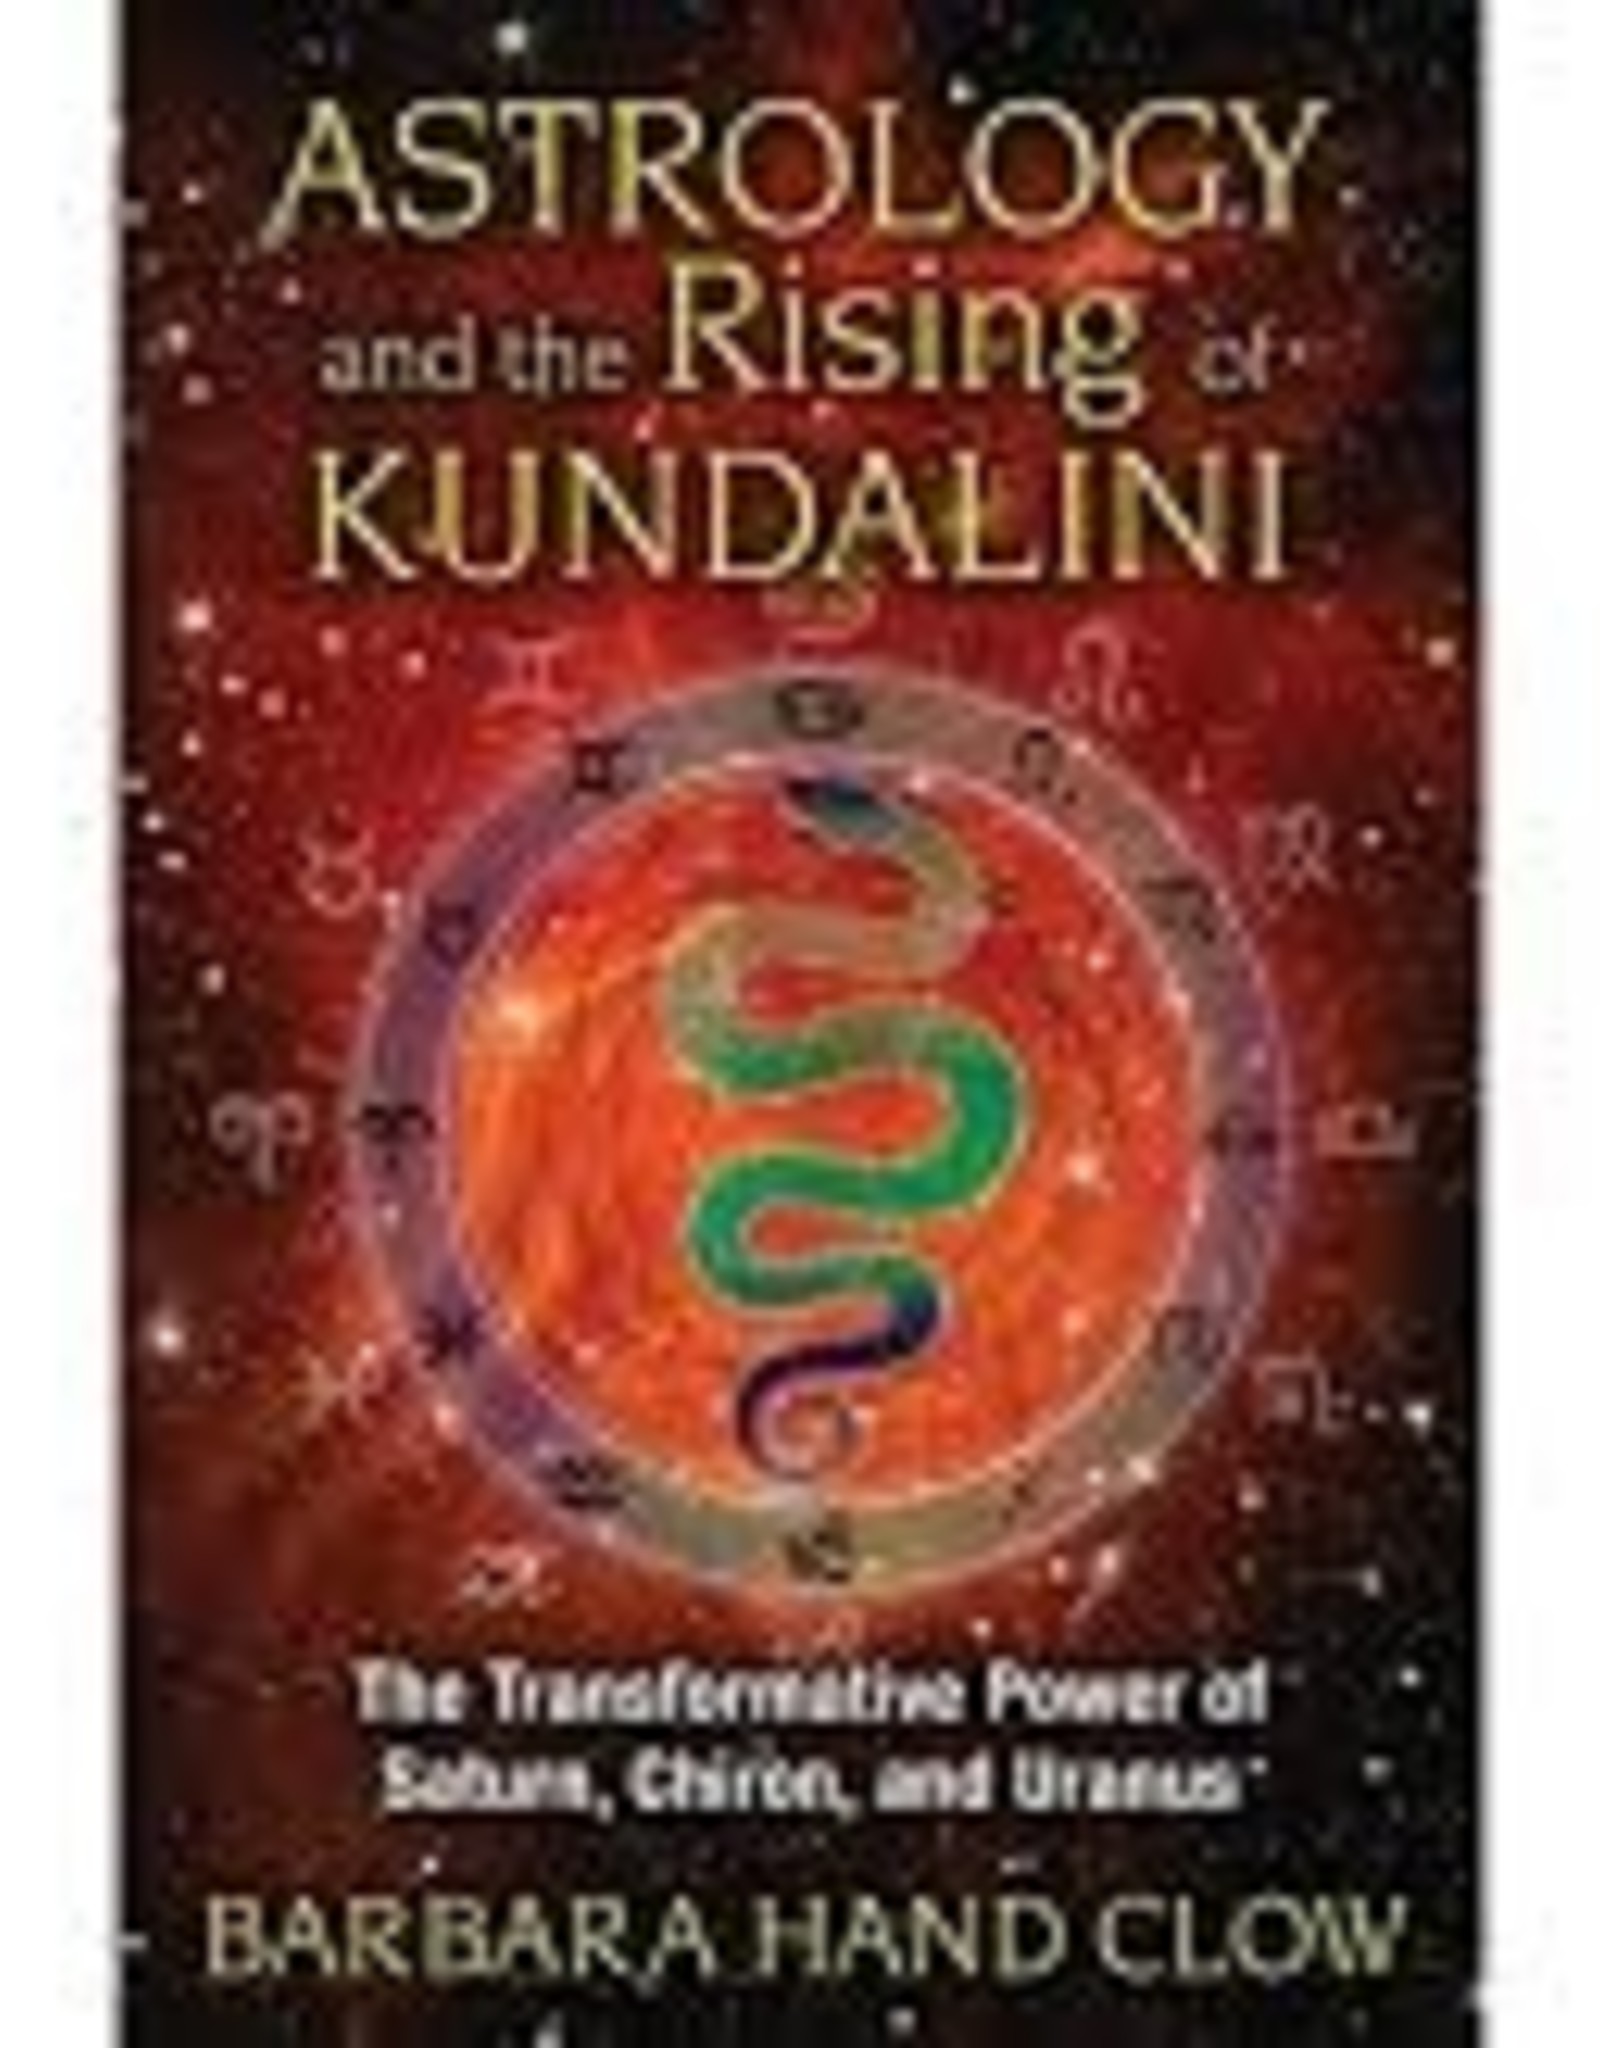 Barbara Hand Clow Astrology and the Rising of Kundalini by Barbara Hand Clow